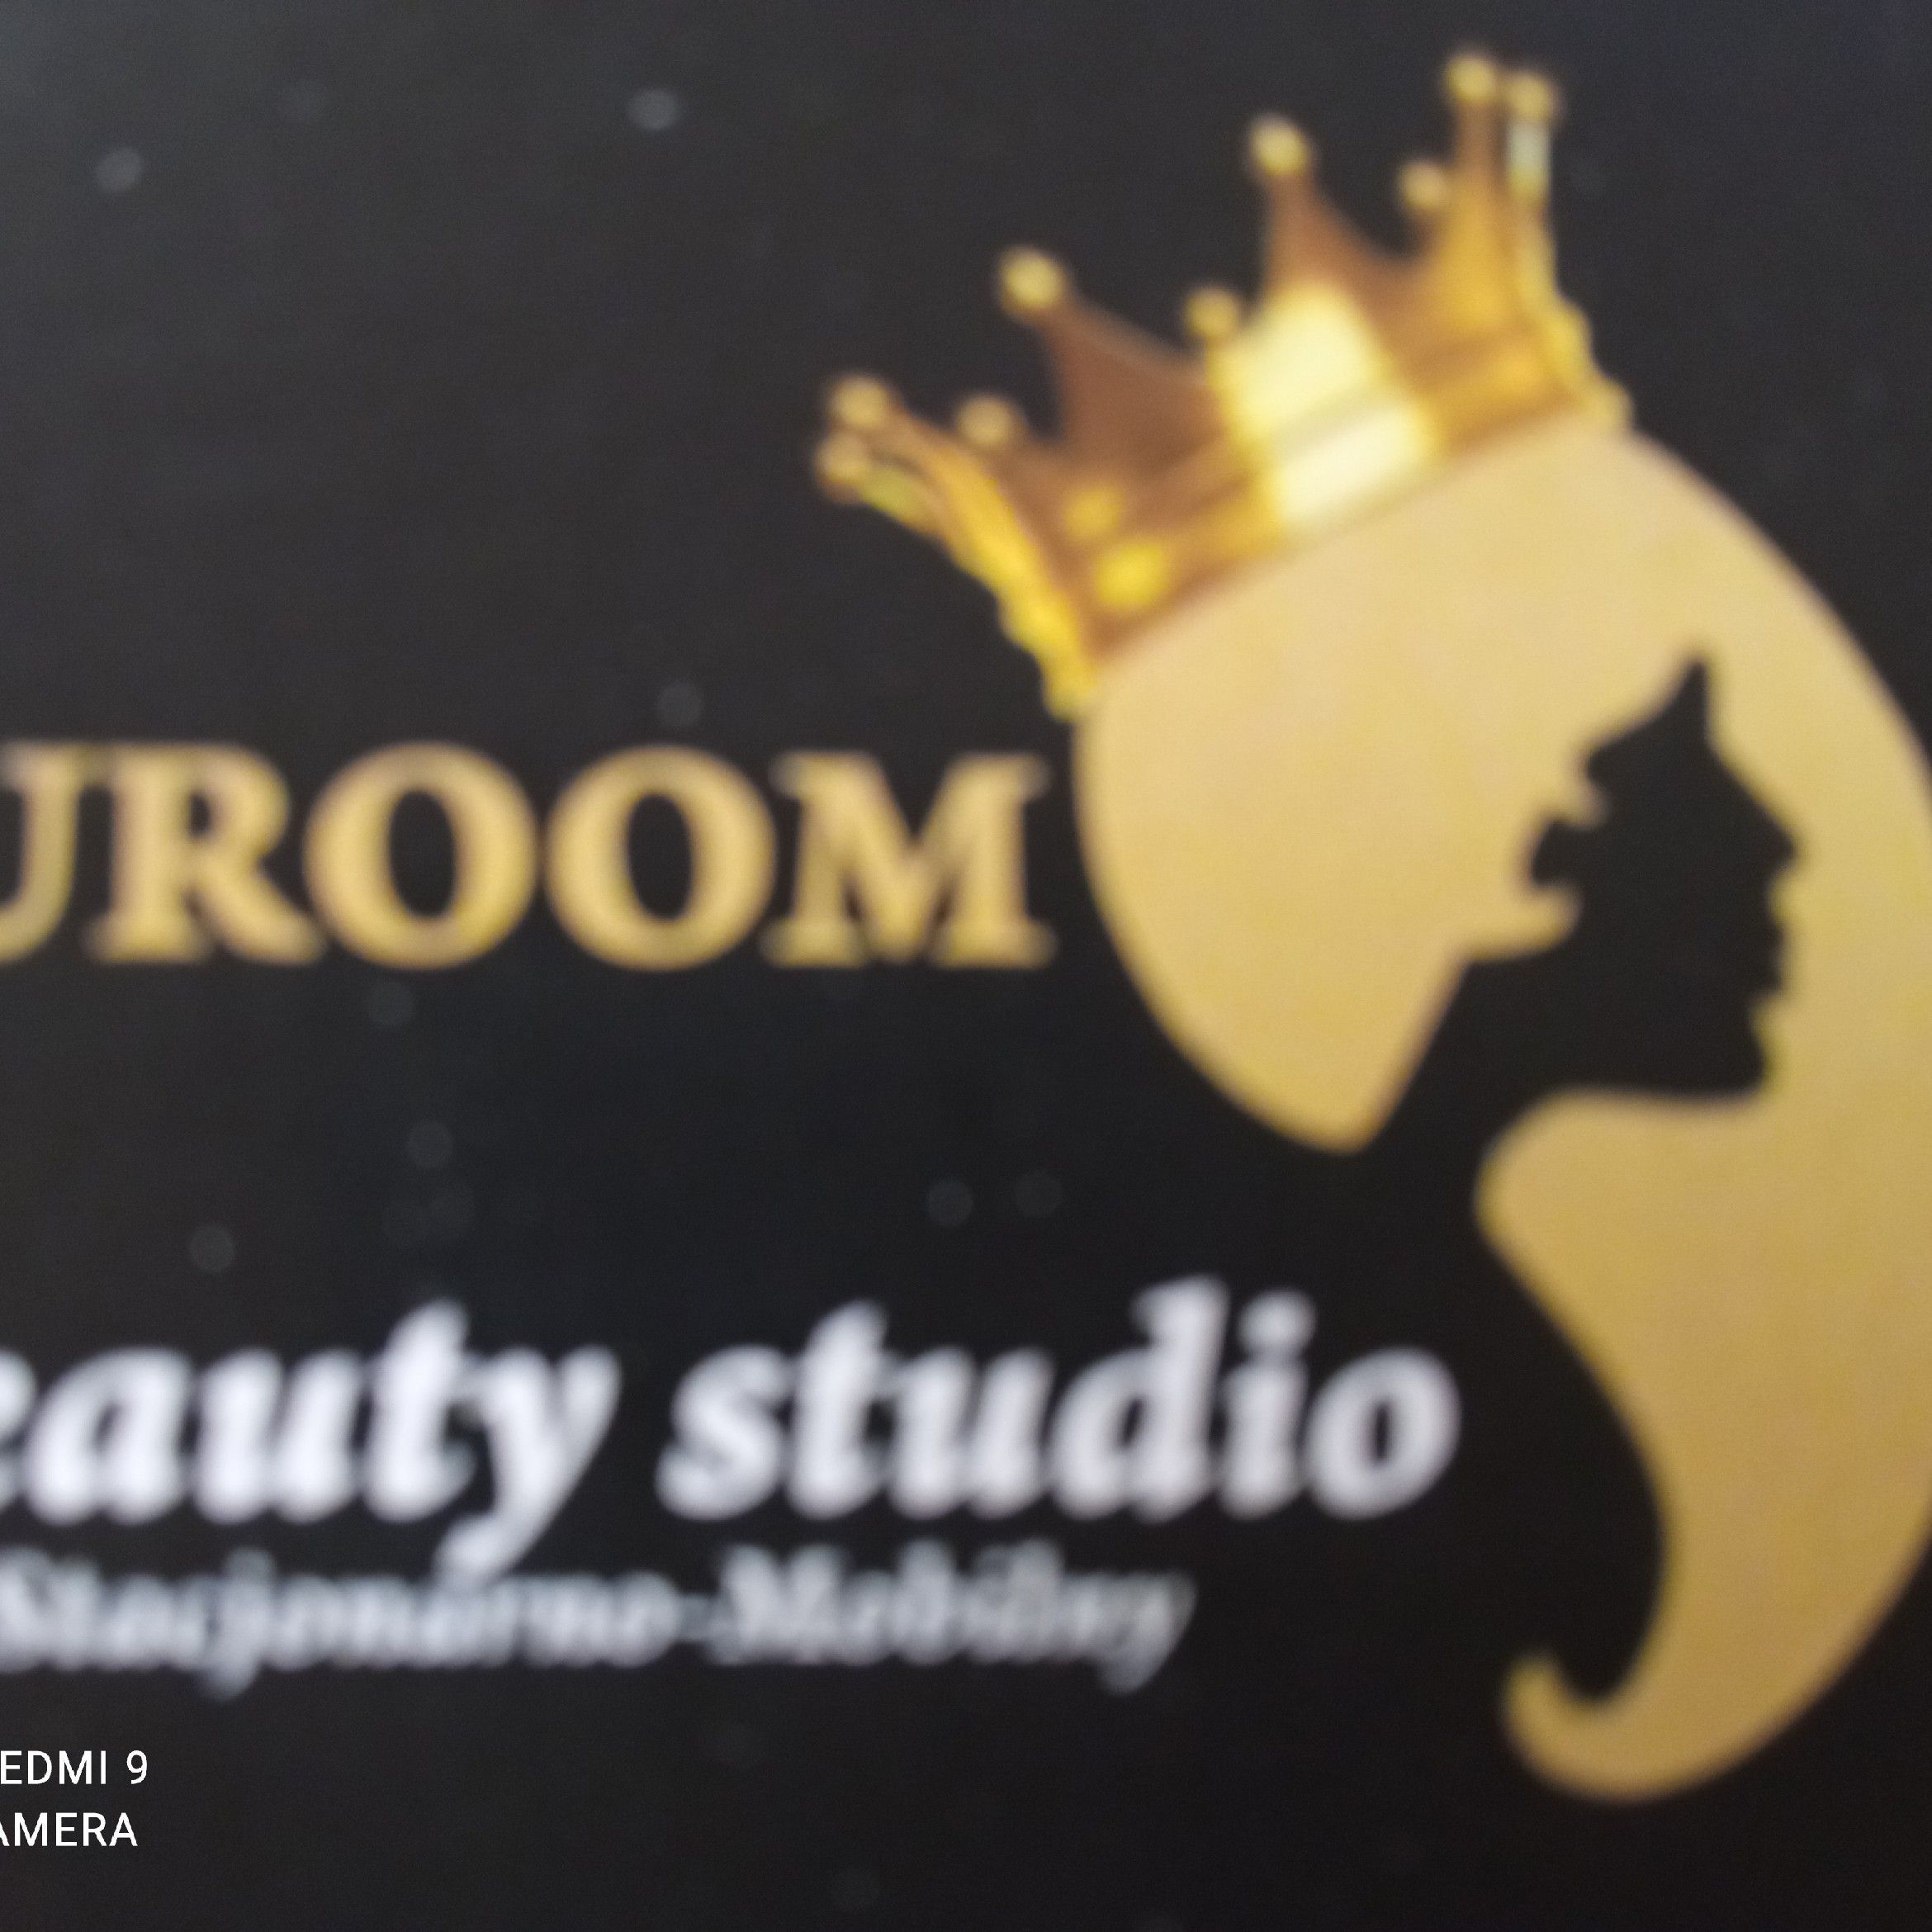 Beauty Studio Auroom, Granitowa, 17a, 93-521, Łódź, Górna